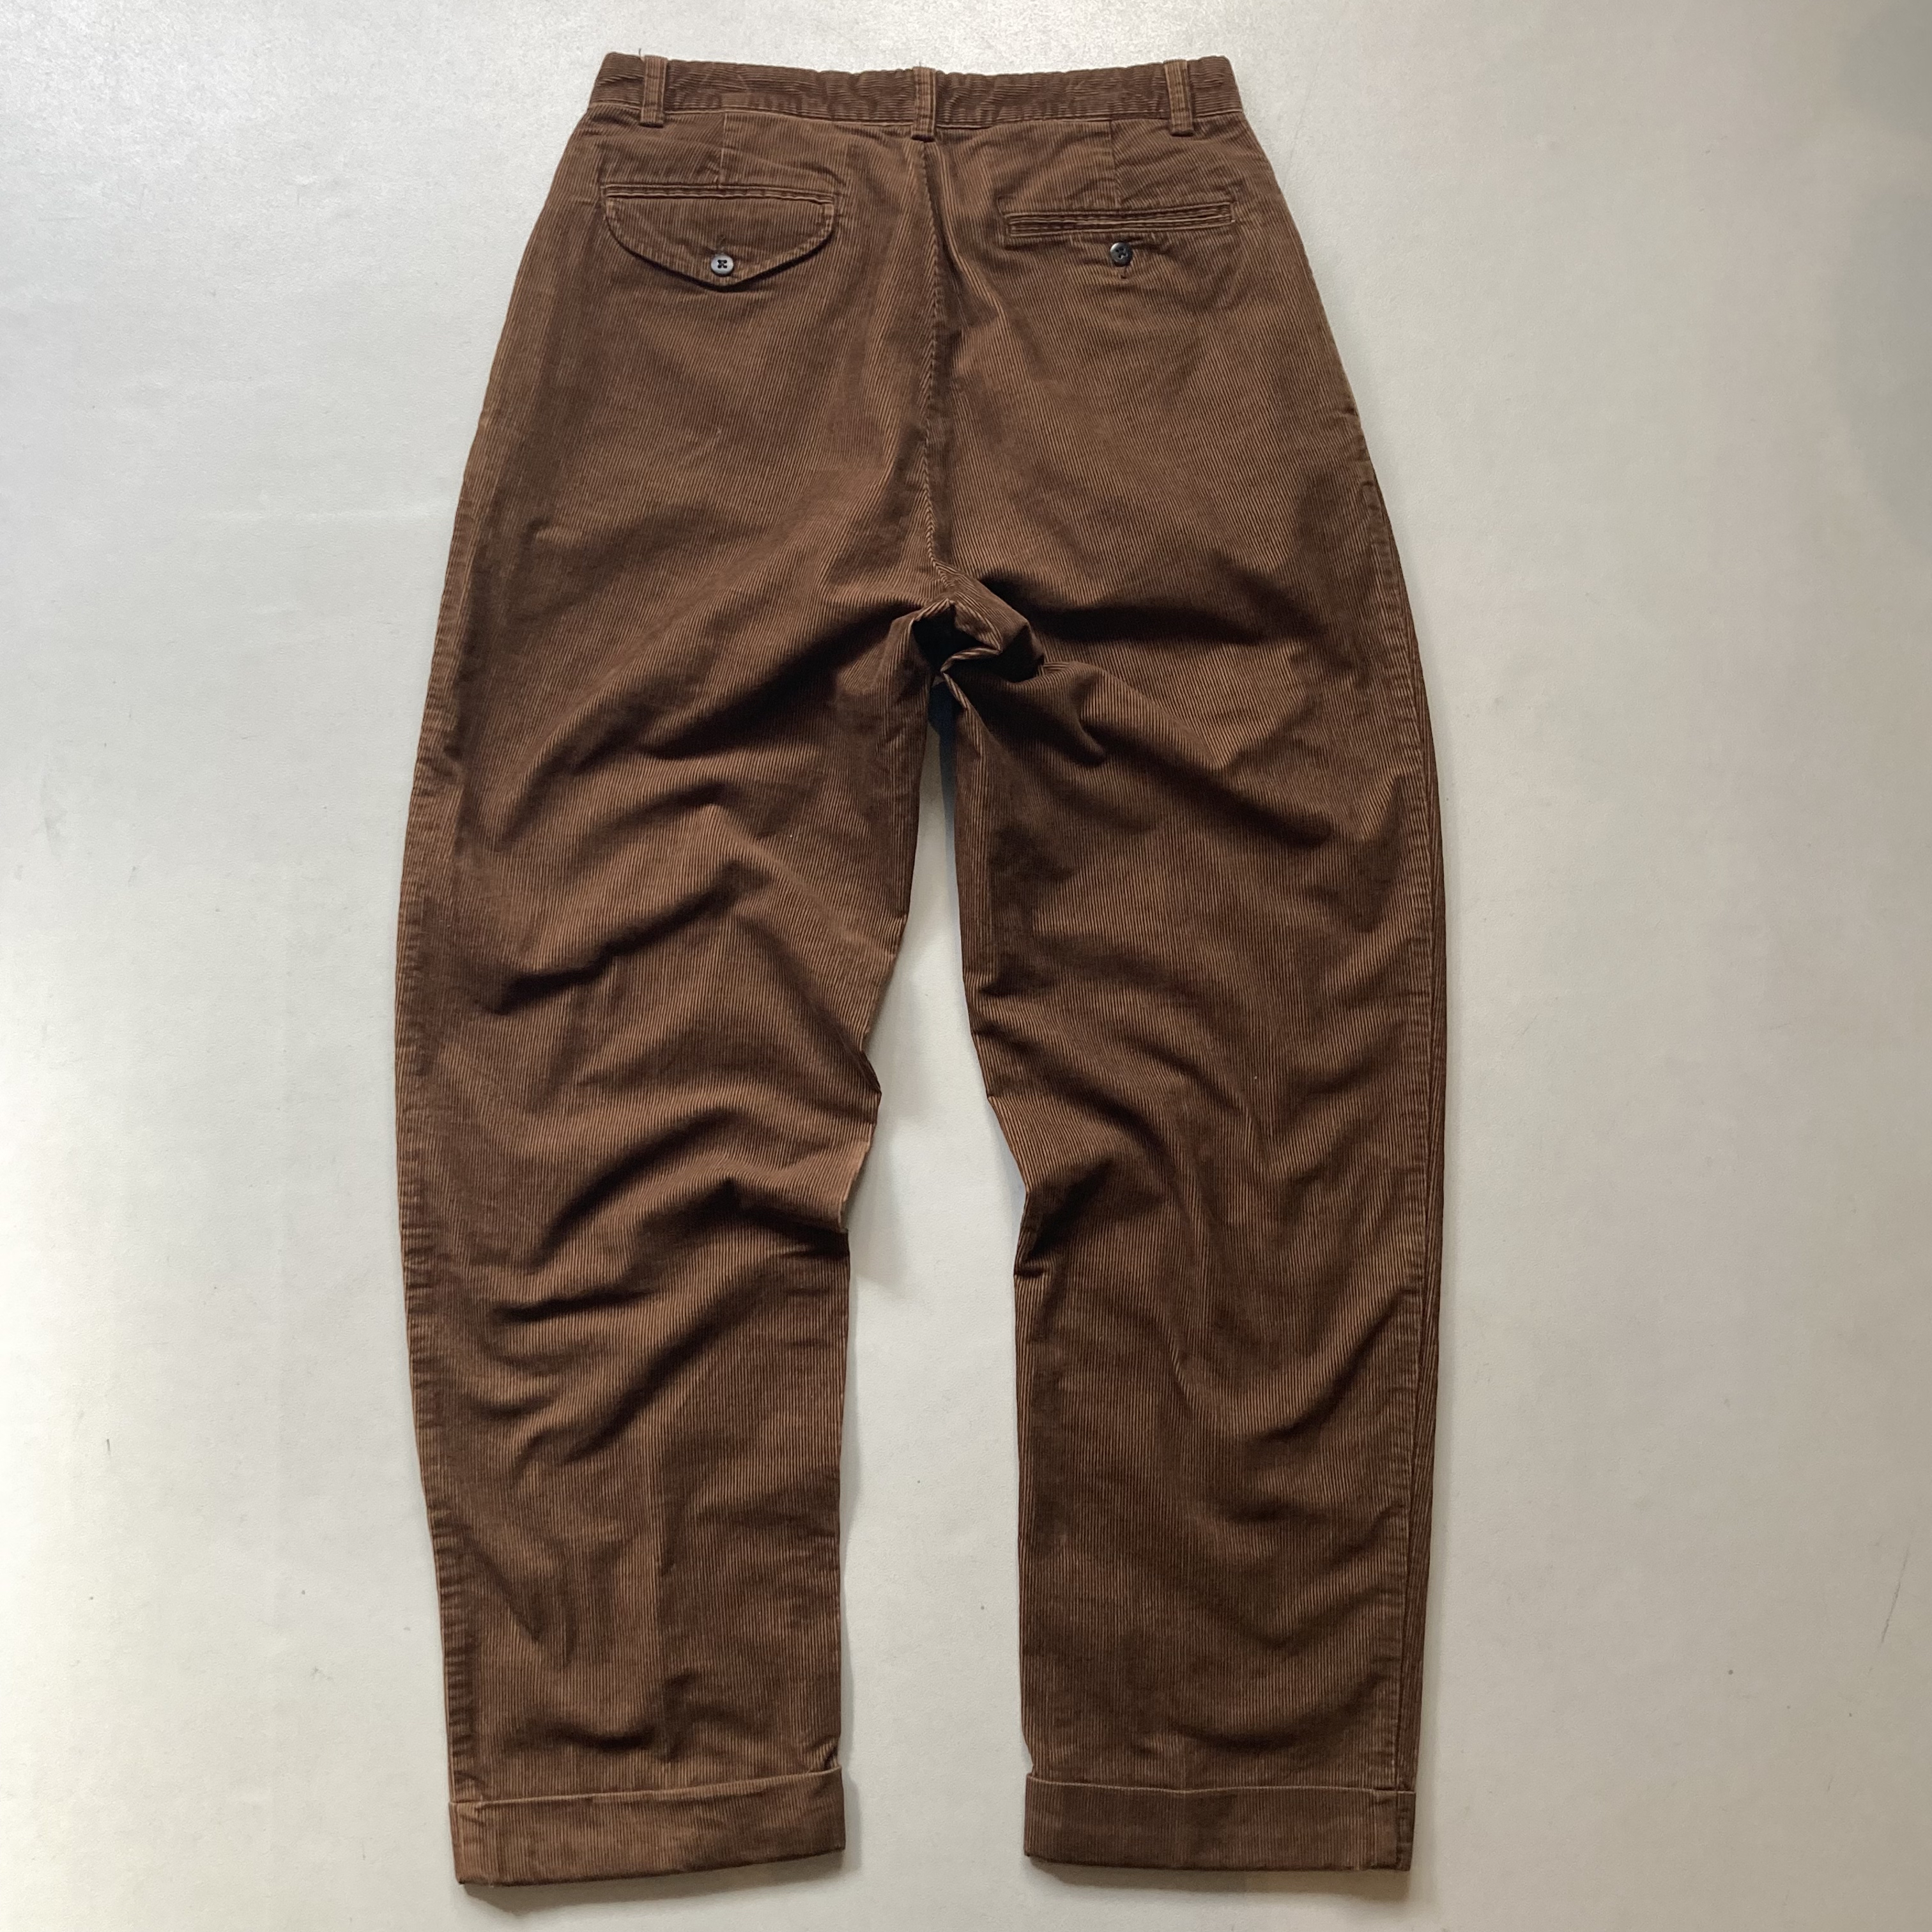 90s polo Ralph Lauren 2tuck corduroy pants 「HAMMOND PANTS」30×30